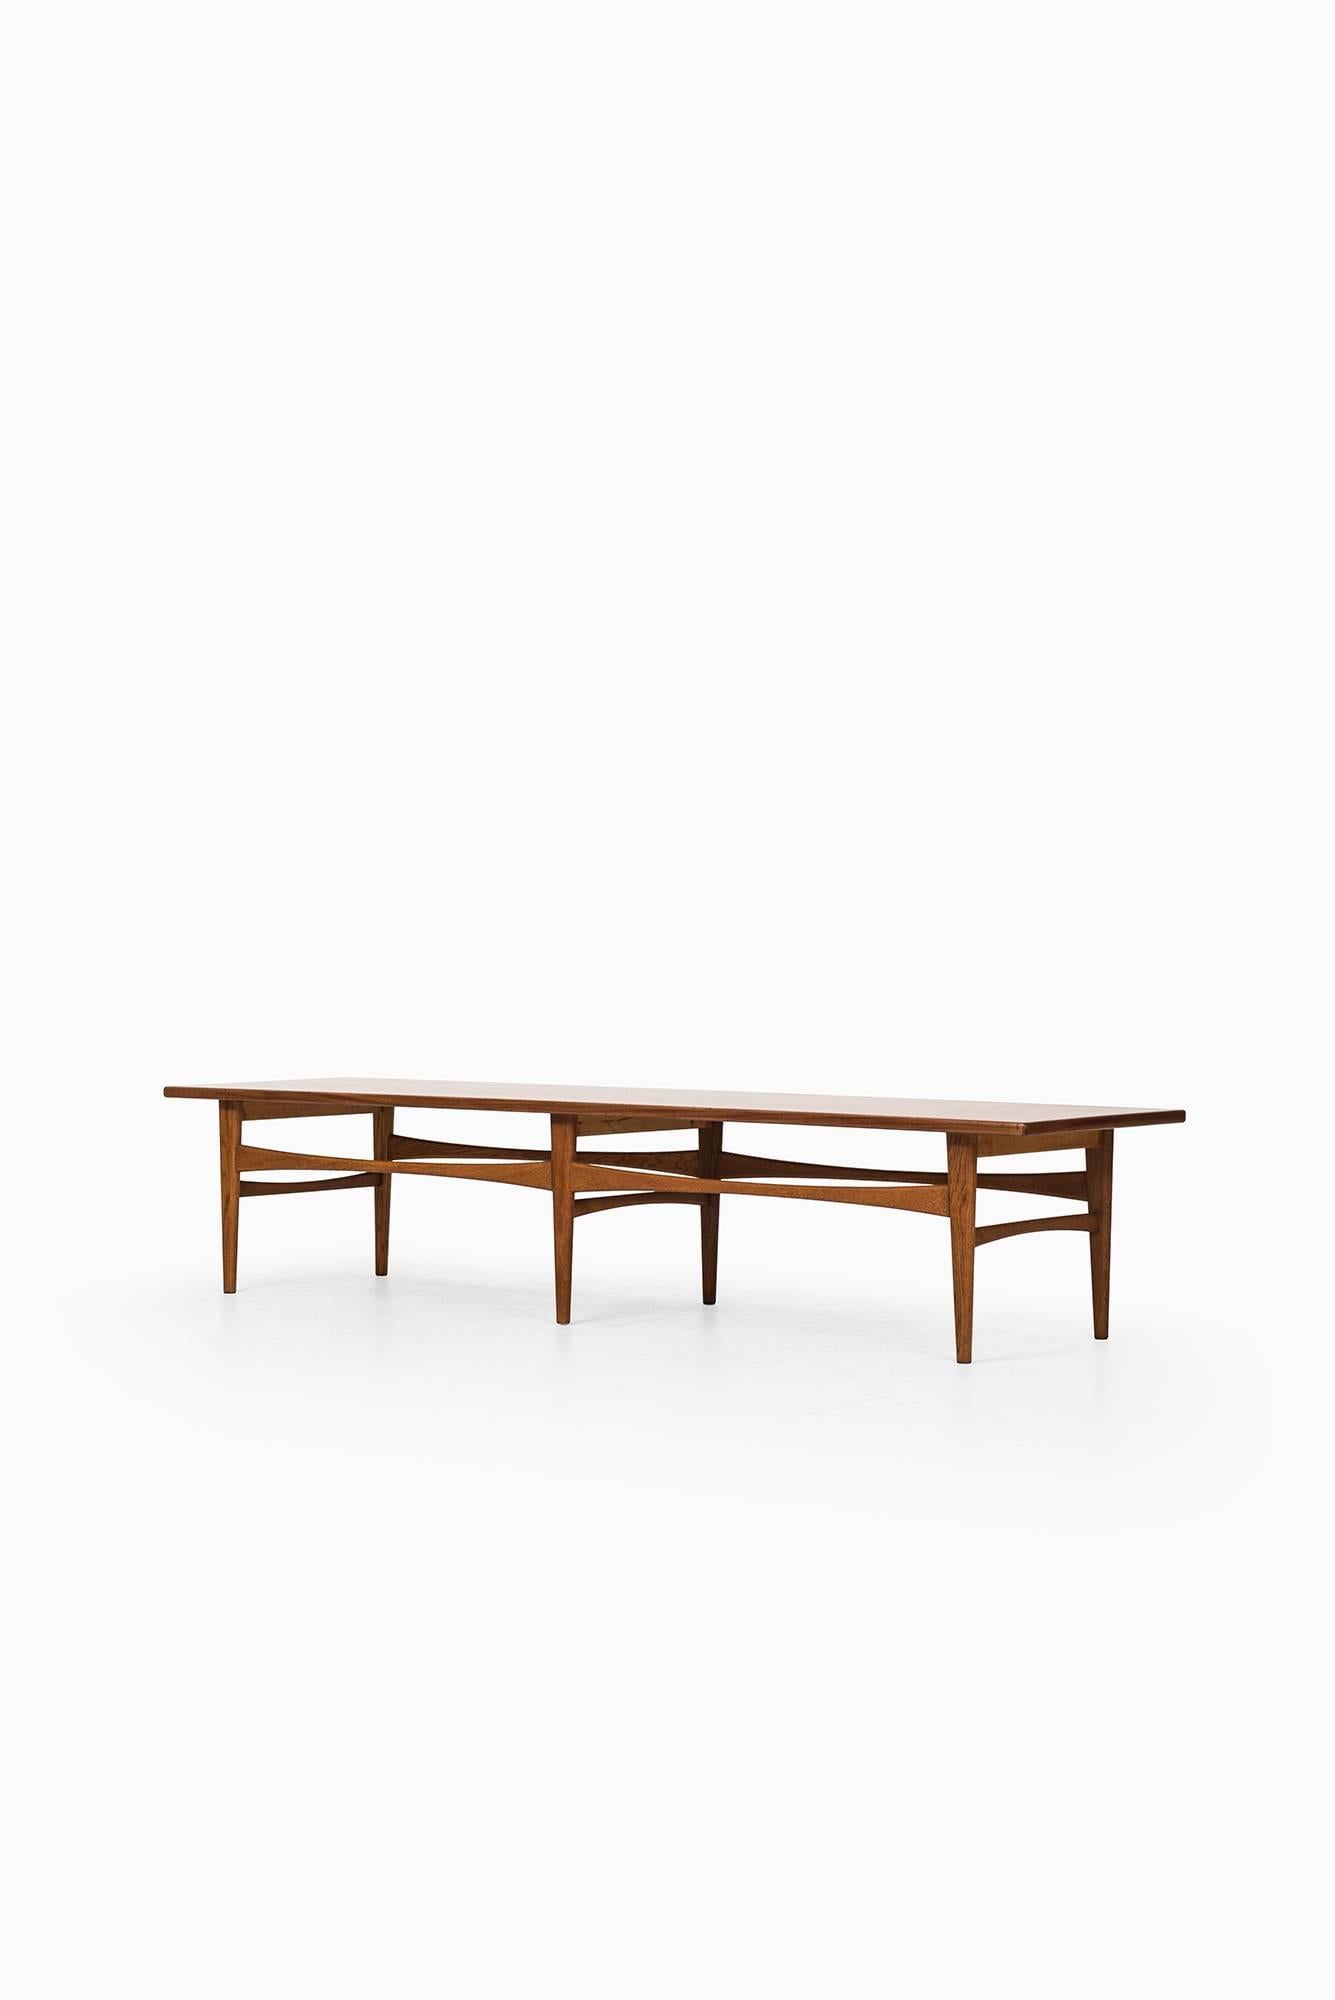 Eric Johansson Bench / Side Table Model TV5 by Abrahamsson Möbelfabrik in Sweden 1